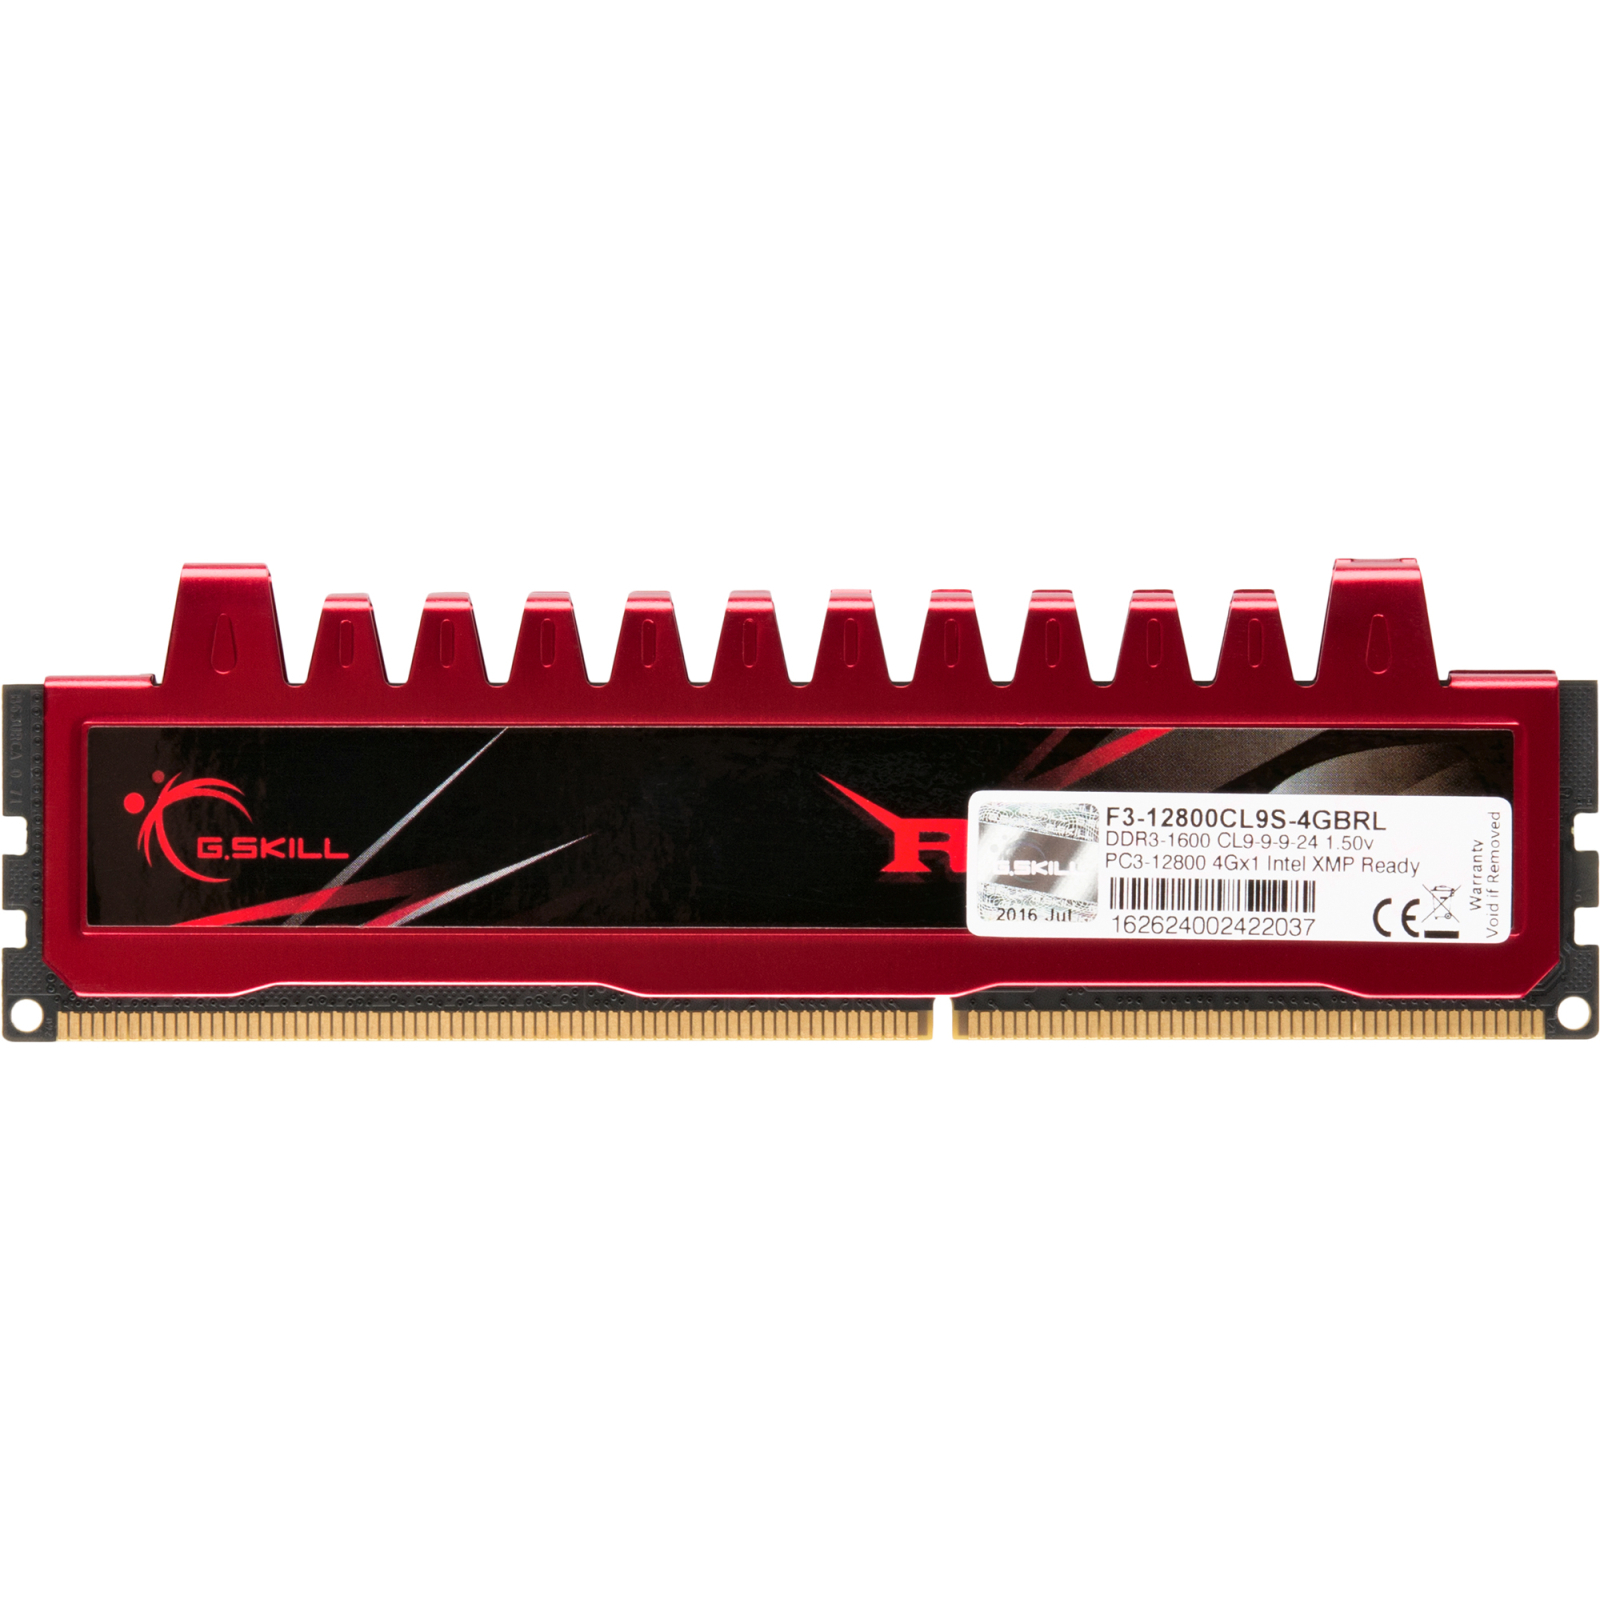 Модуль памяти для компьютера DDR3 4GB 1600 MHz G.Skill (F3-12800CL9S-4GBRL)